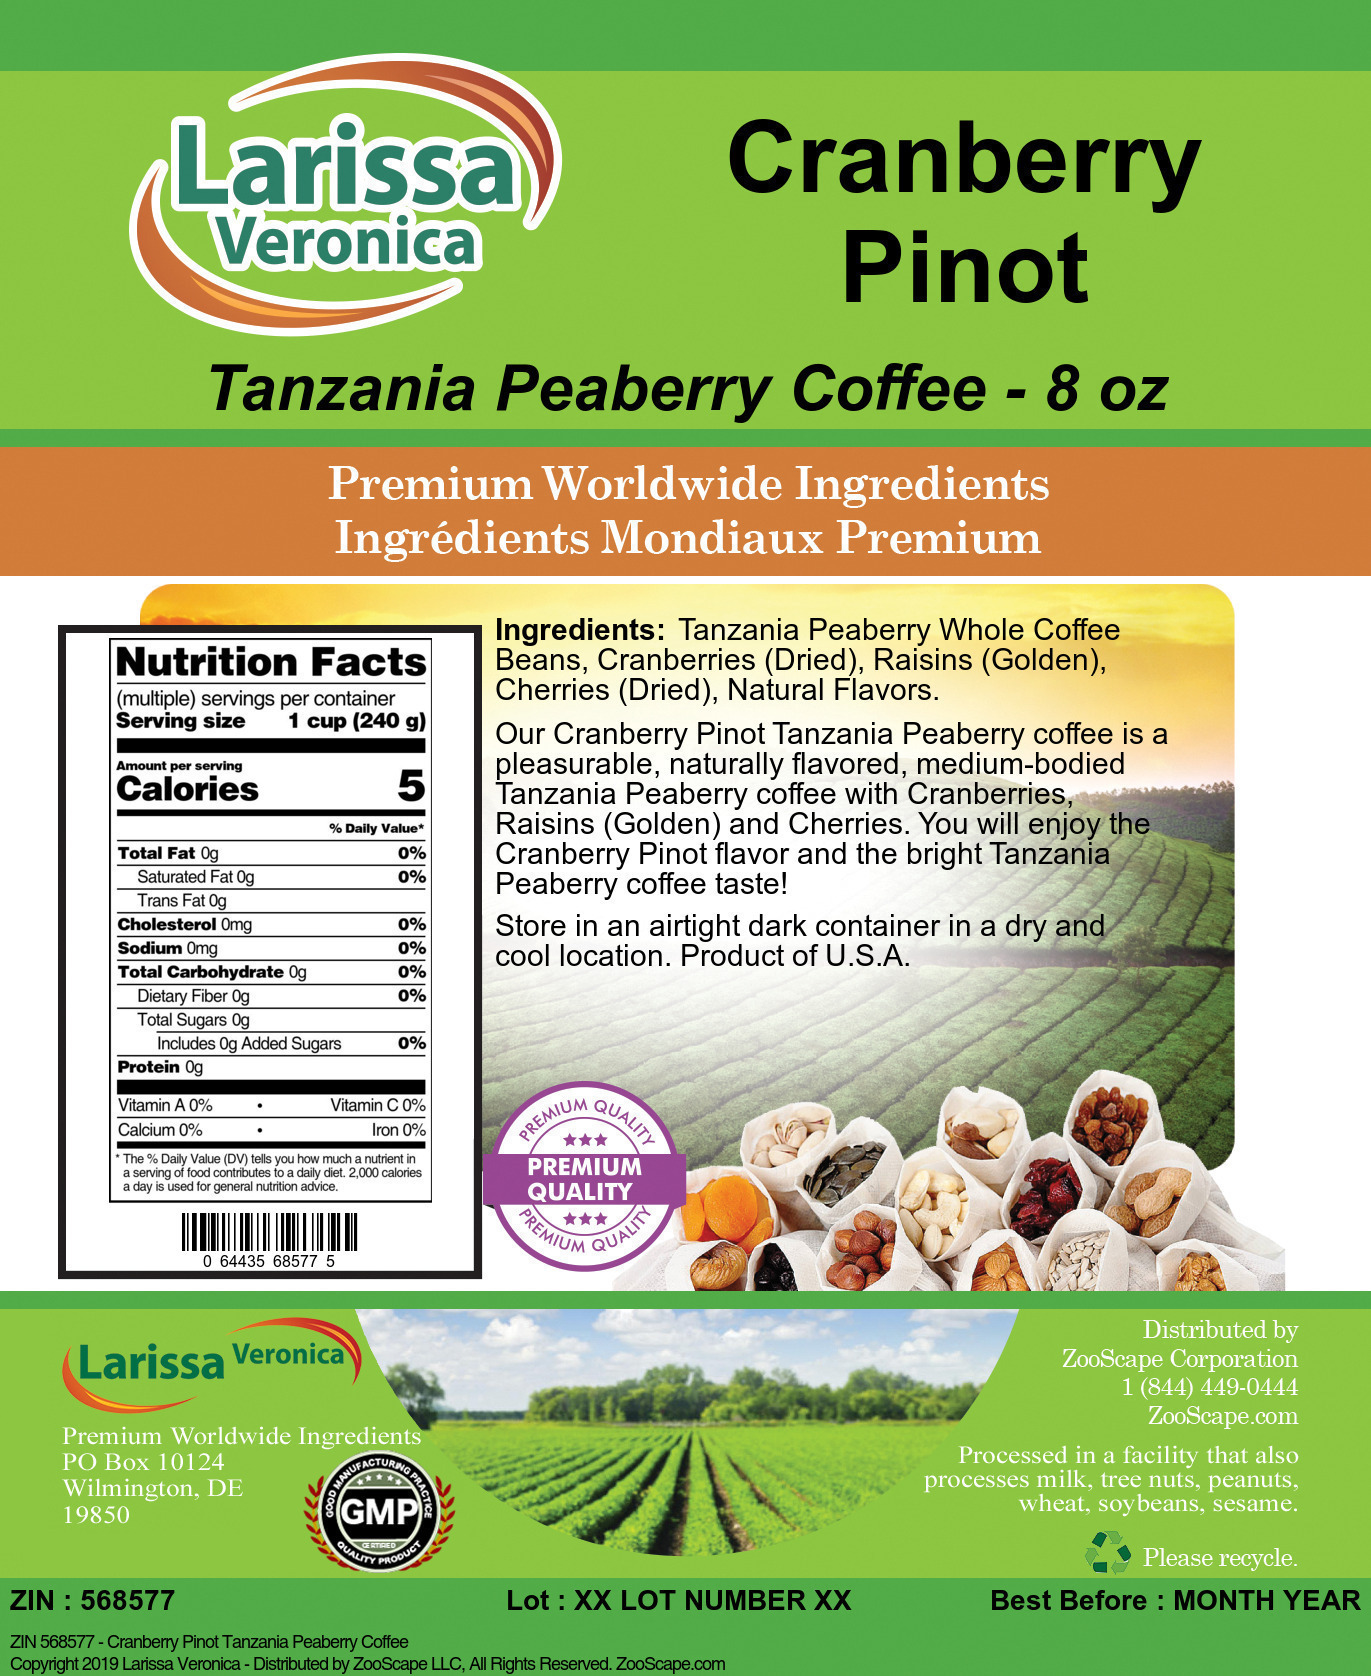 Cranberry Pinot Tanzania Peaberry Coffee - Label